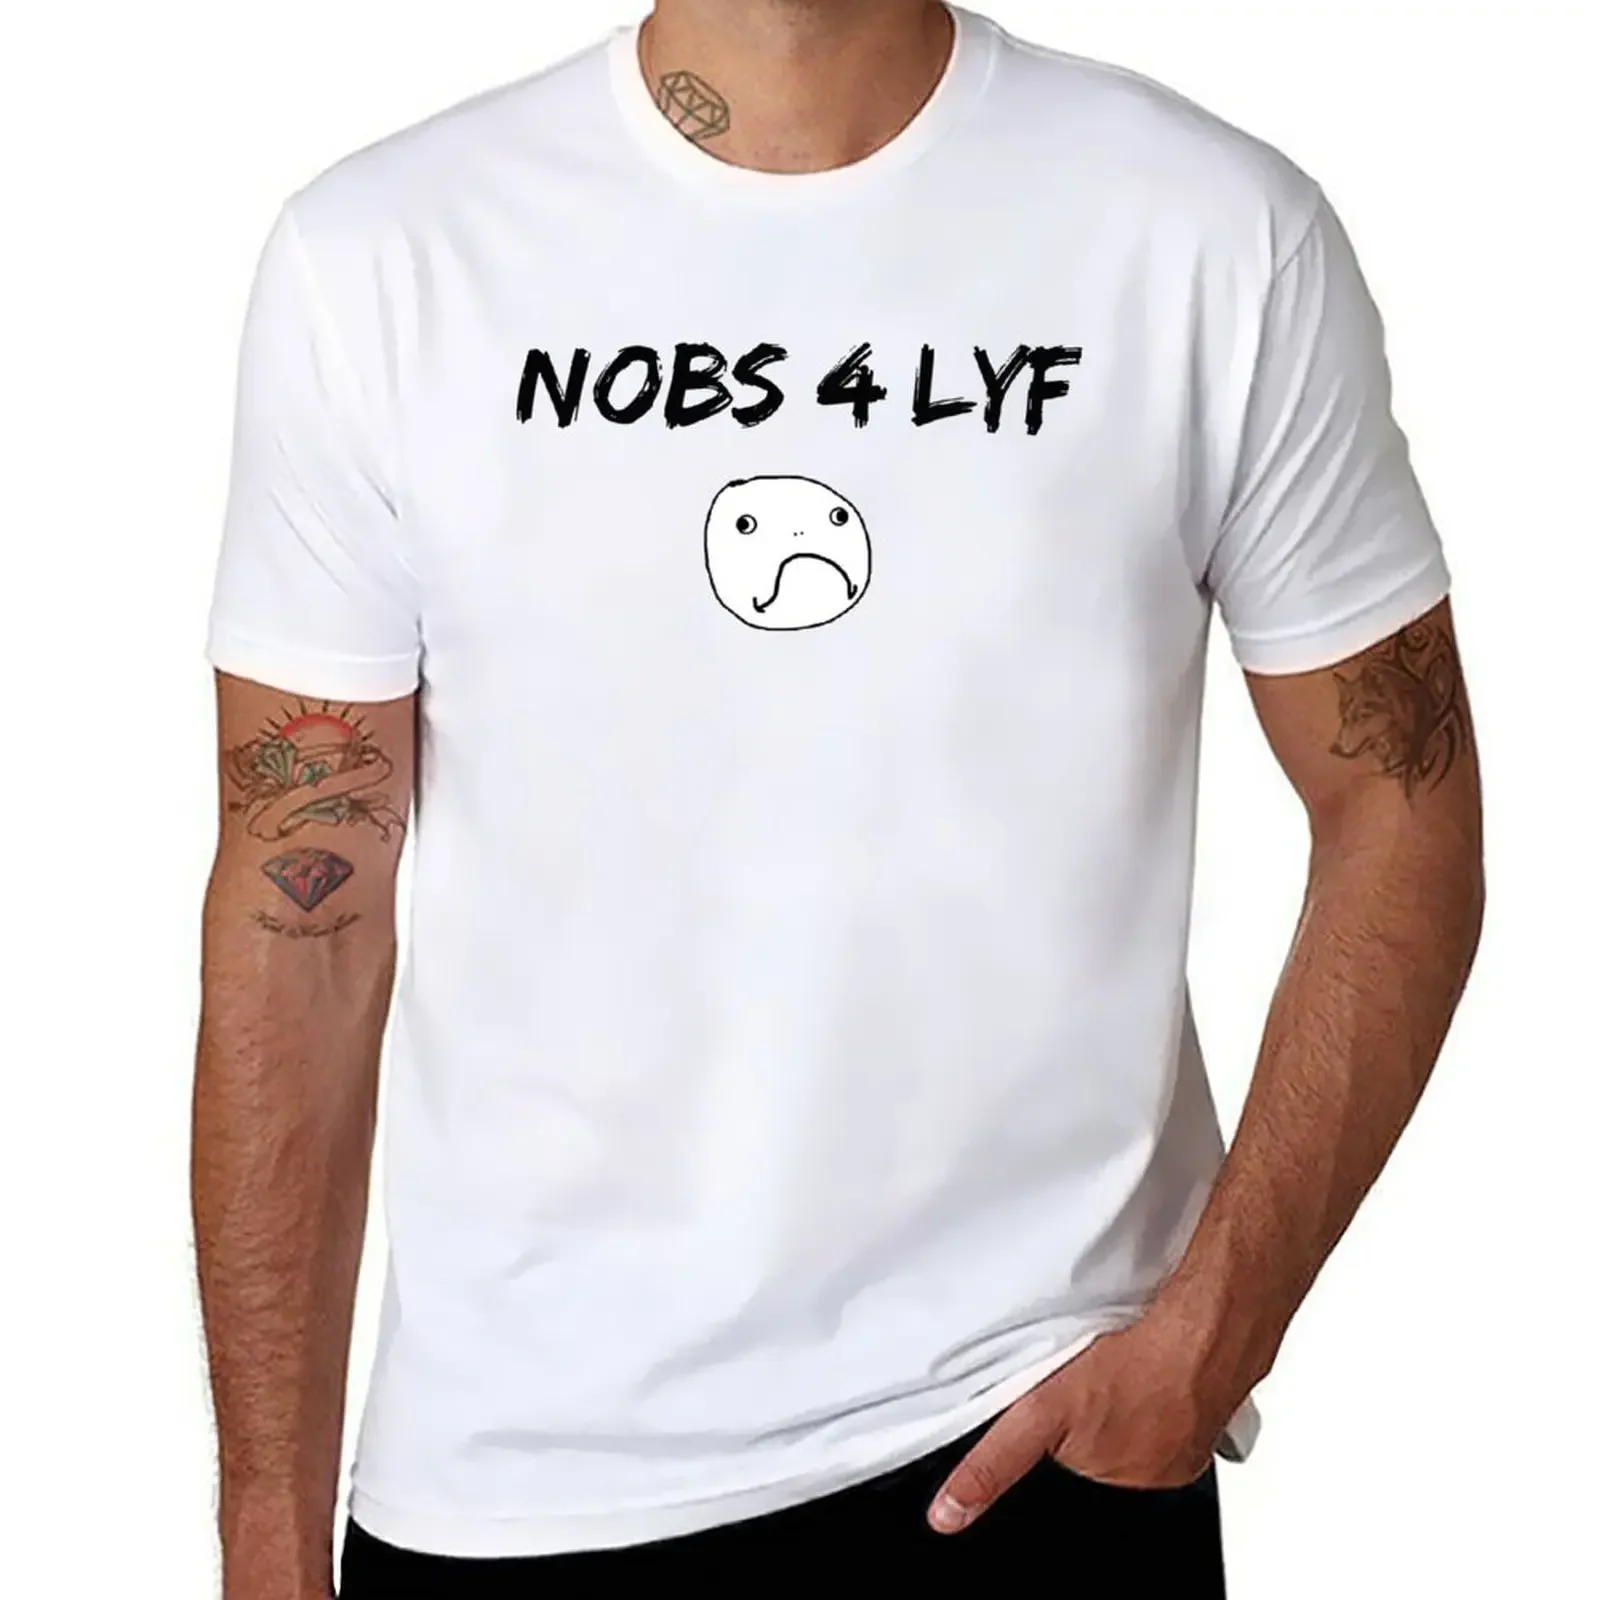 Nobs 4 Lyf T-Shirt sports fans anime clothes graphics T-shirt men